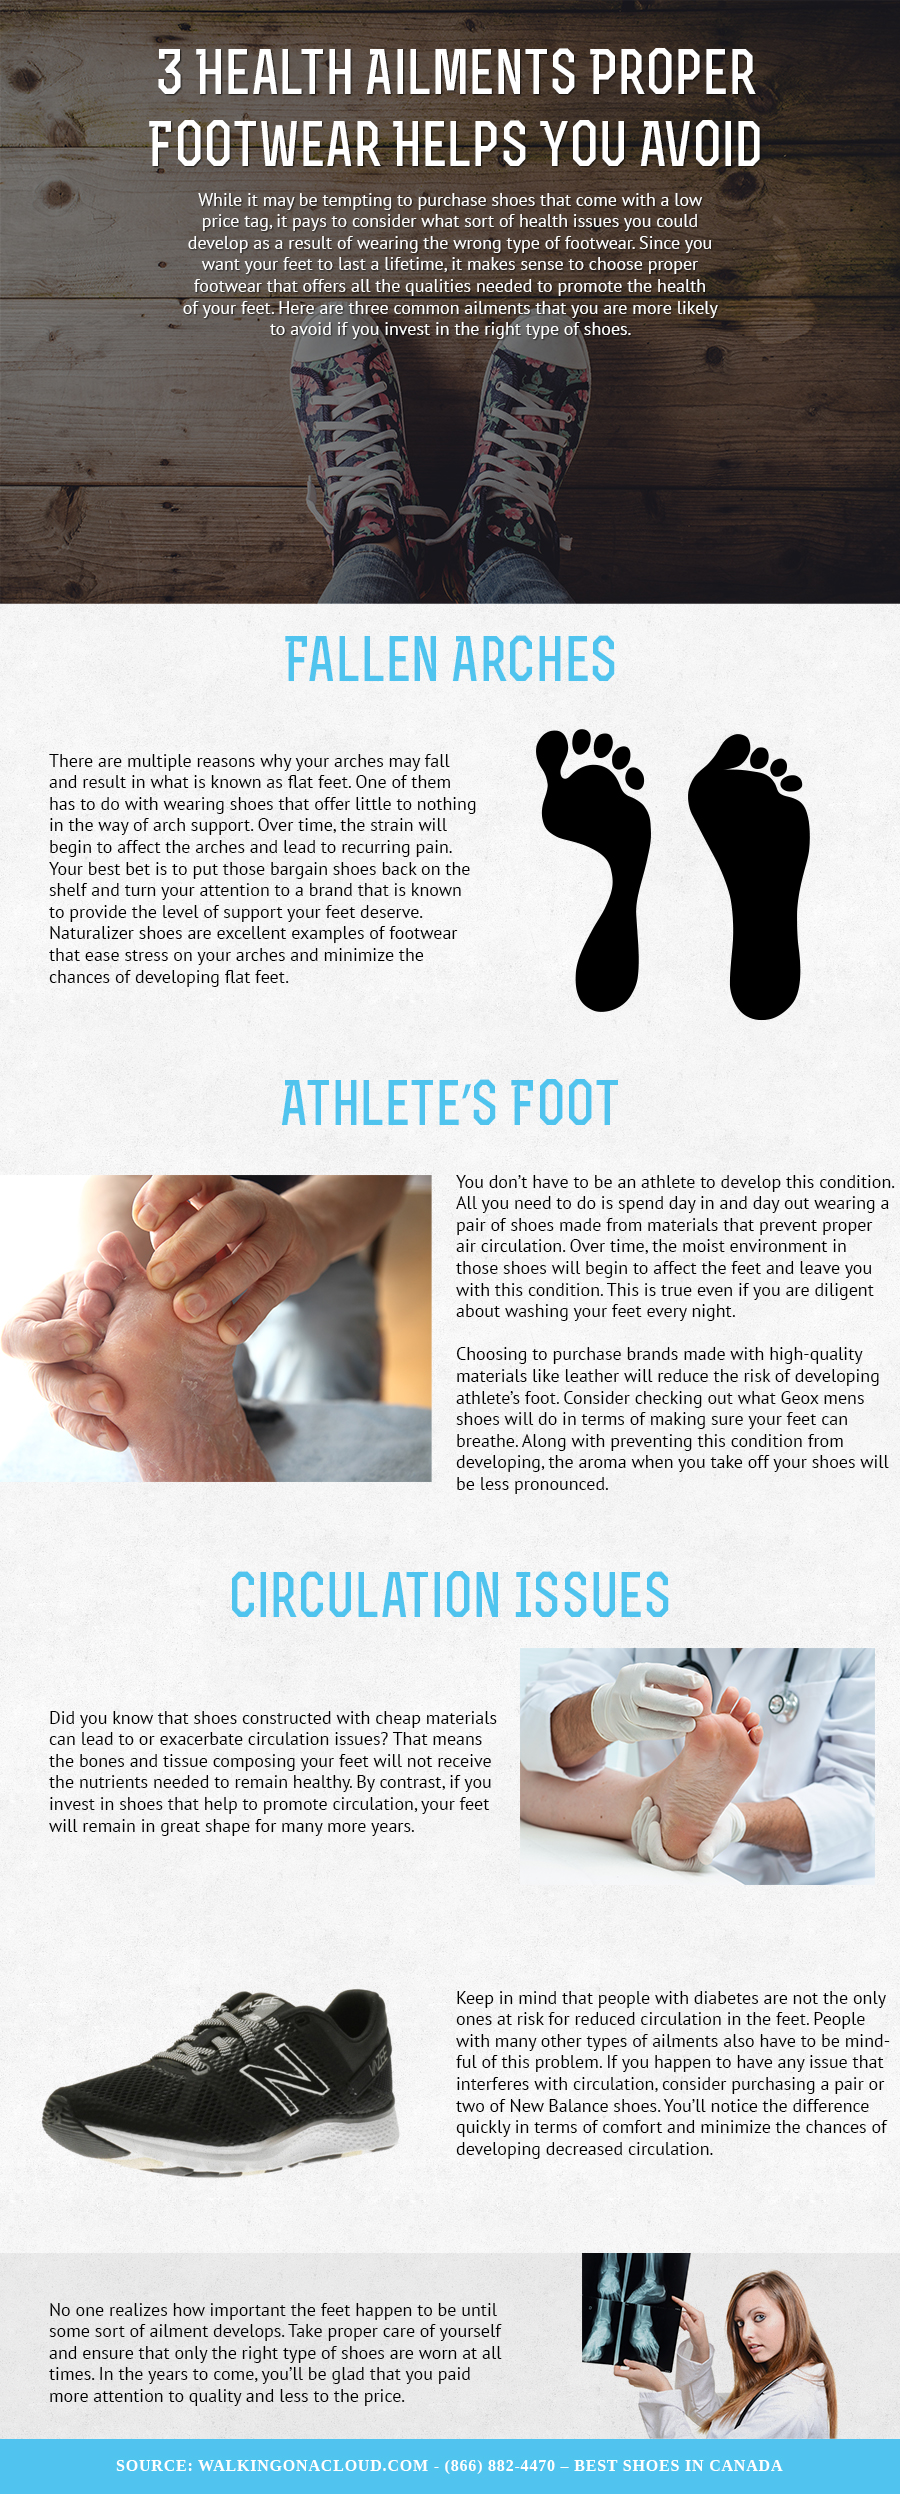 3-Health-Ailments-Proper-Footwear-Helps-You-Avoid